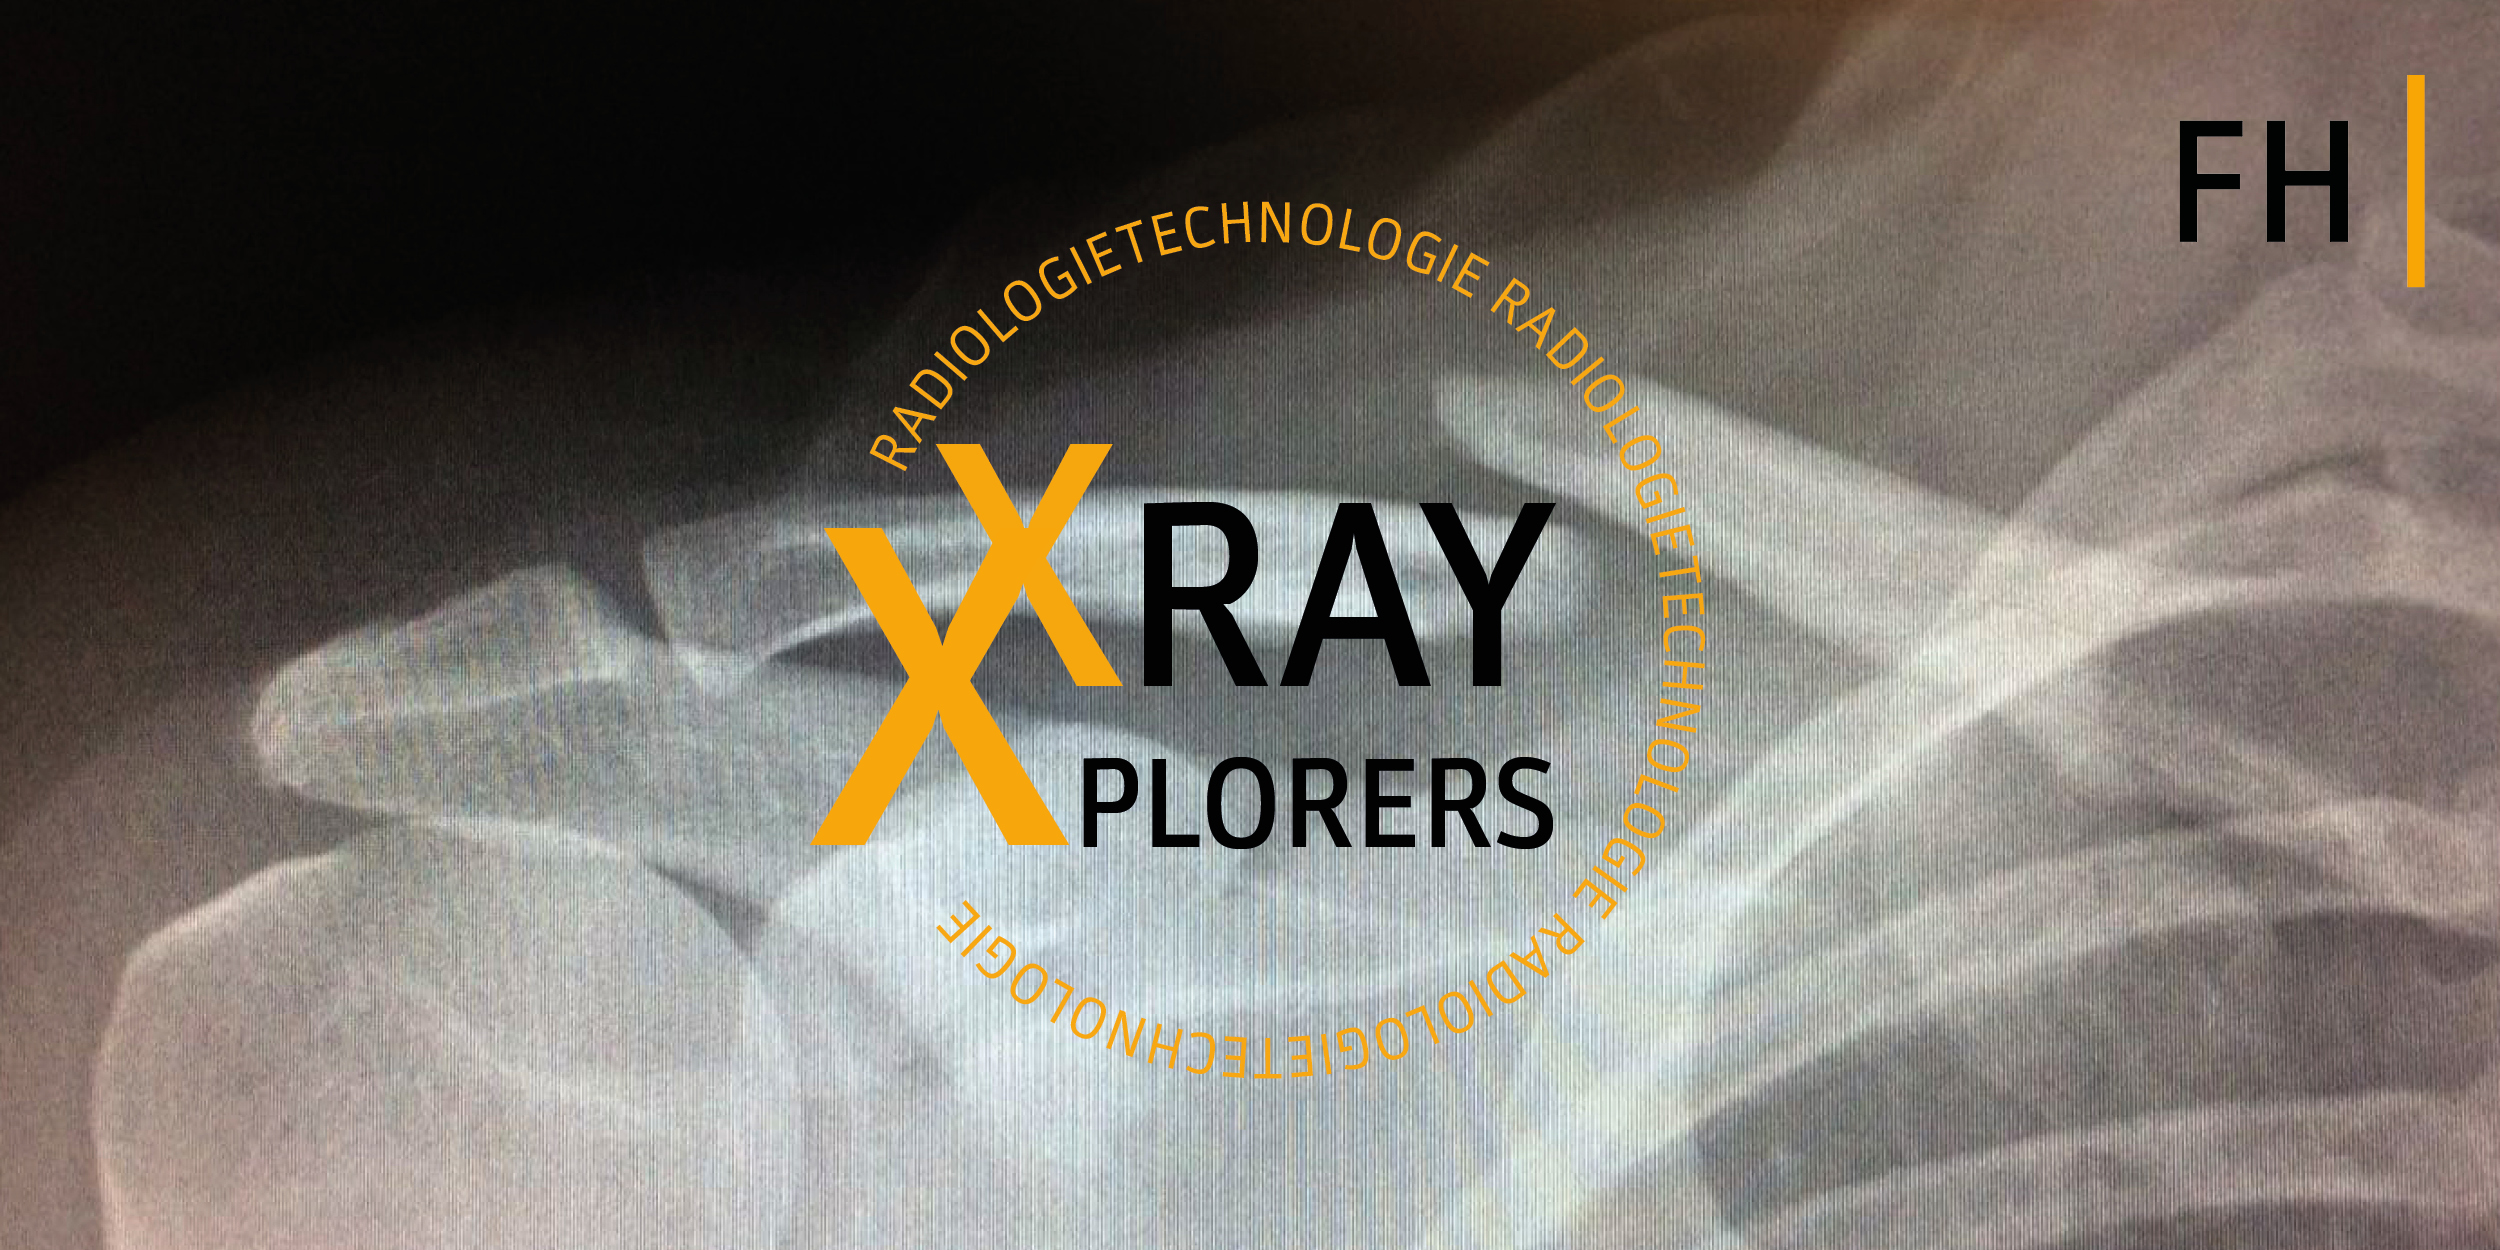 x-ray x-plorers: Neue Videoreihe des Studienganges "Radiologietechnologie"